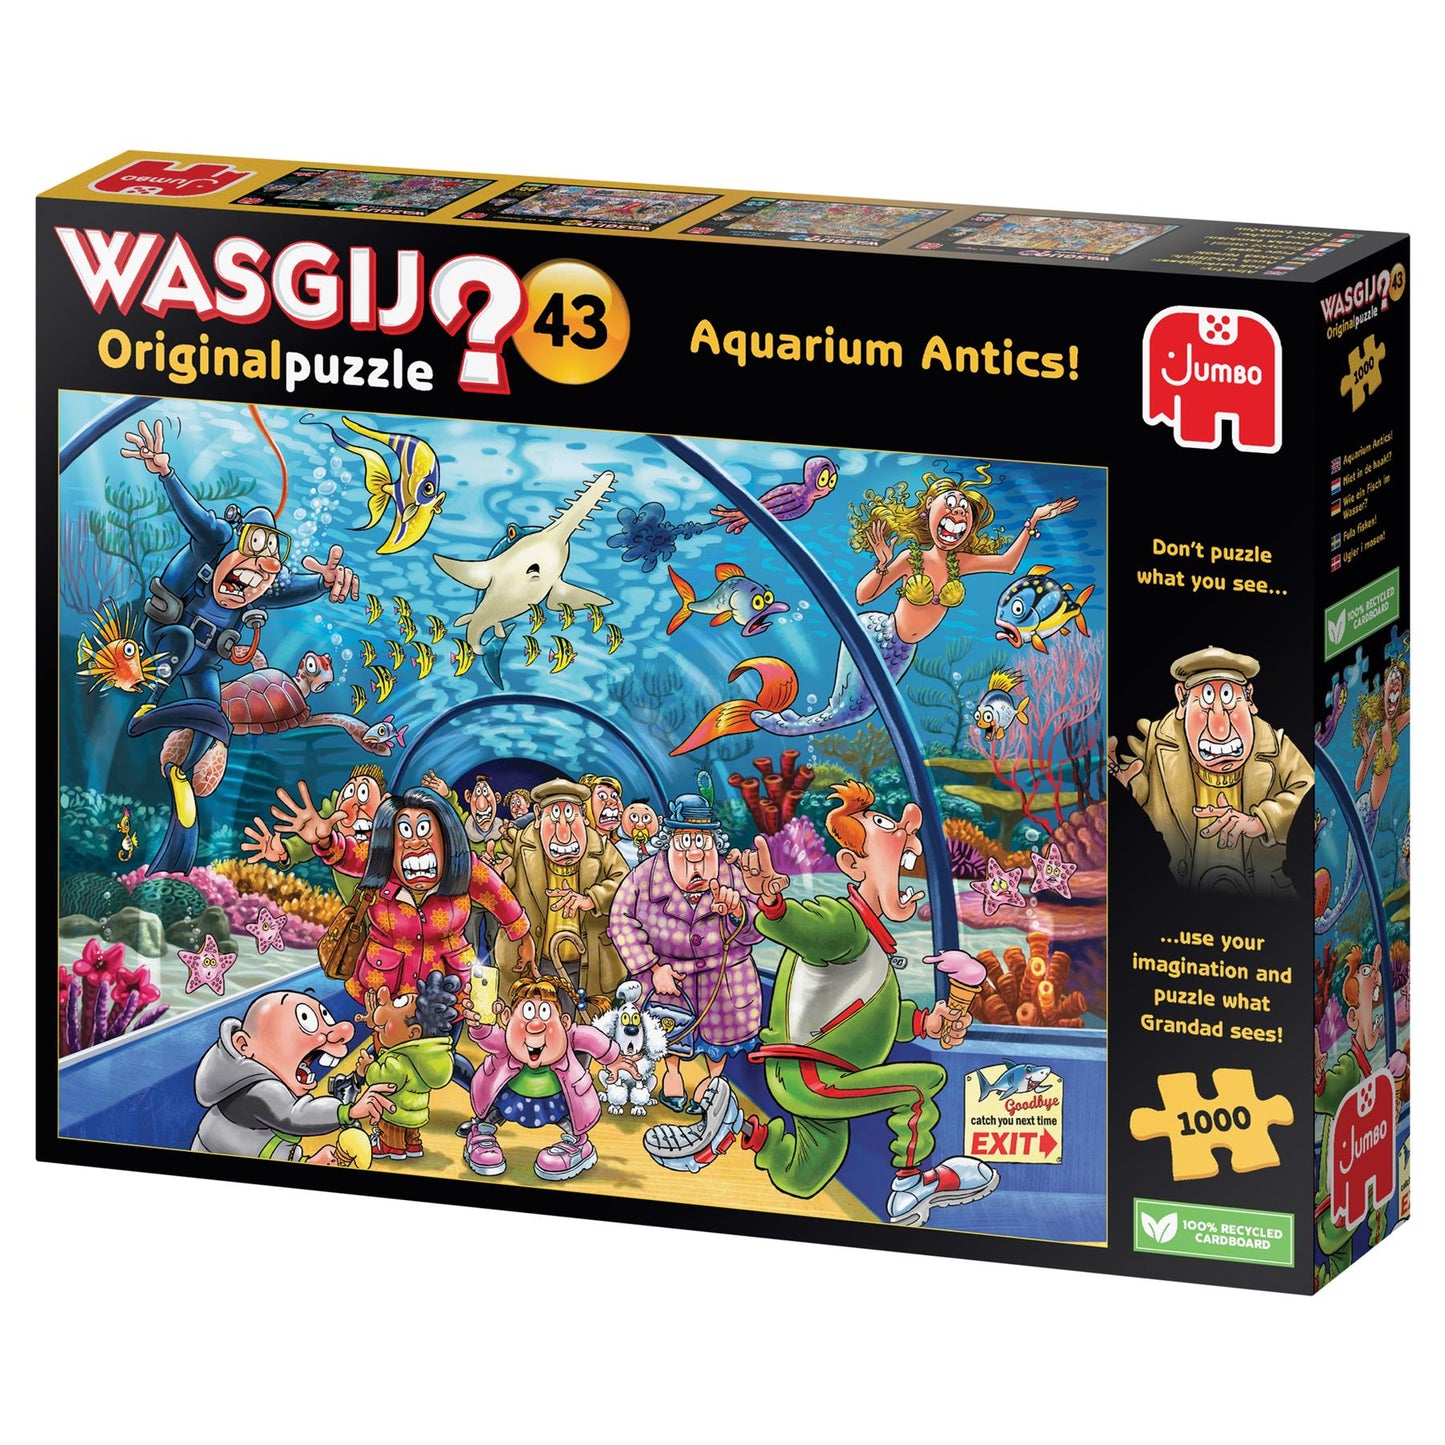 Wasgij Original 43 Aquarium Antics 1000 Piece Jigsaw Puzzle